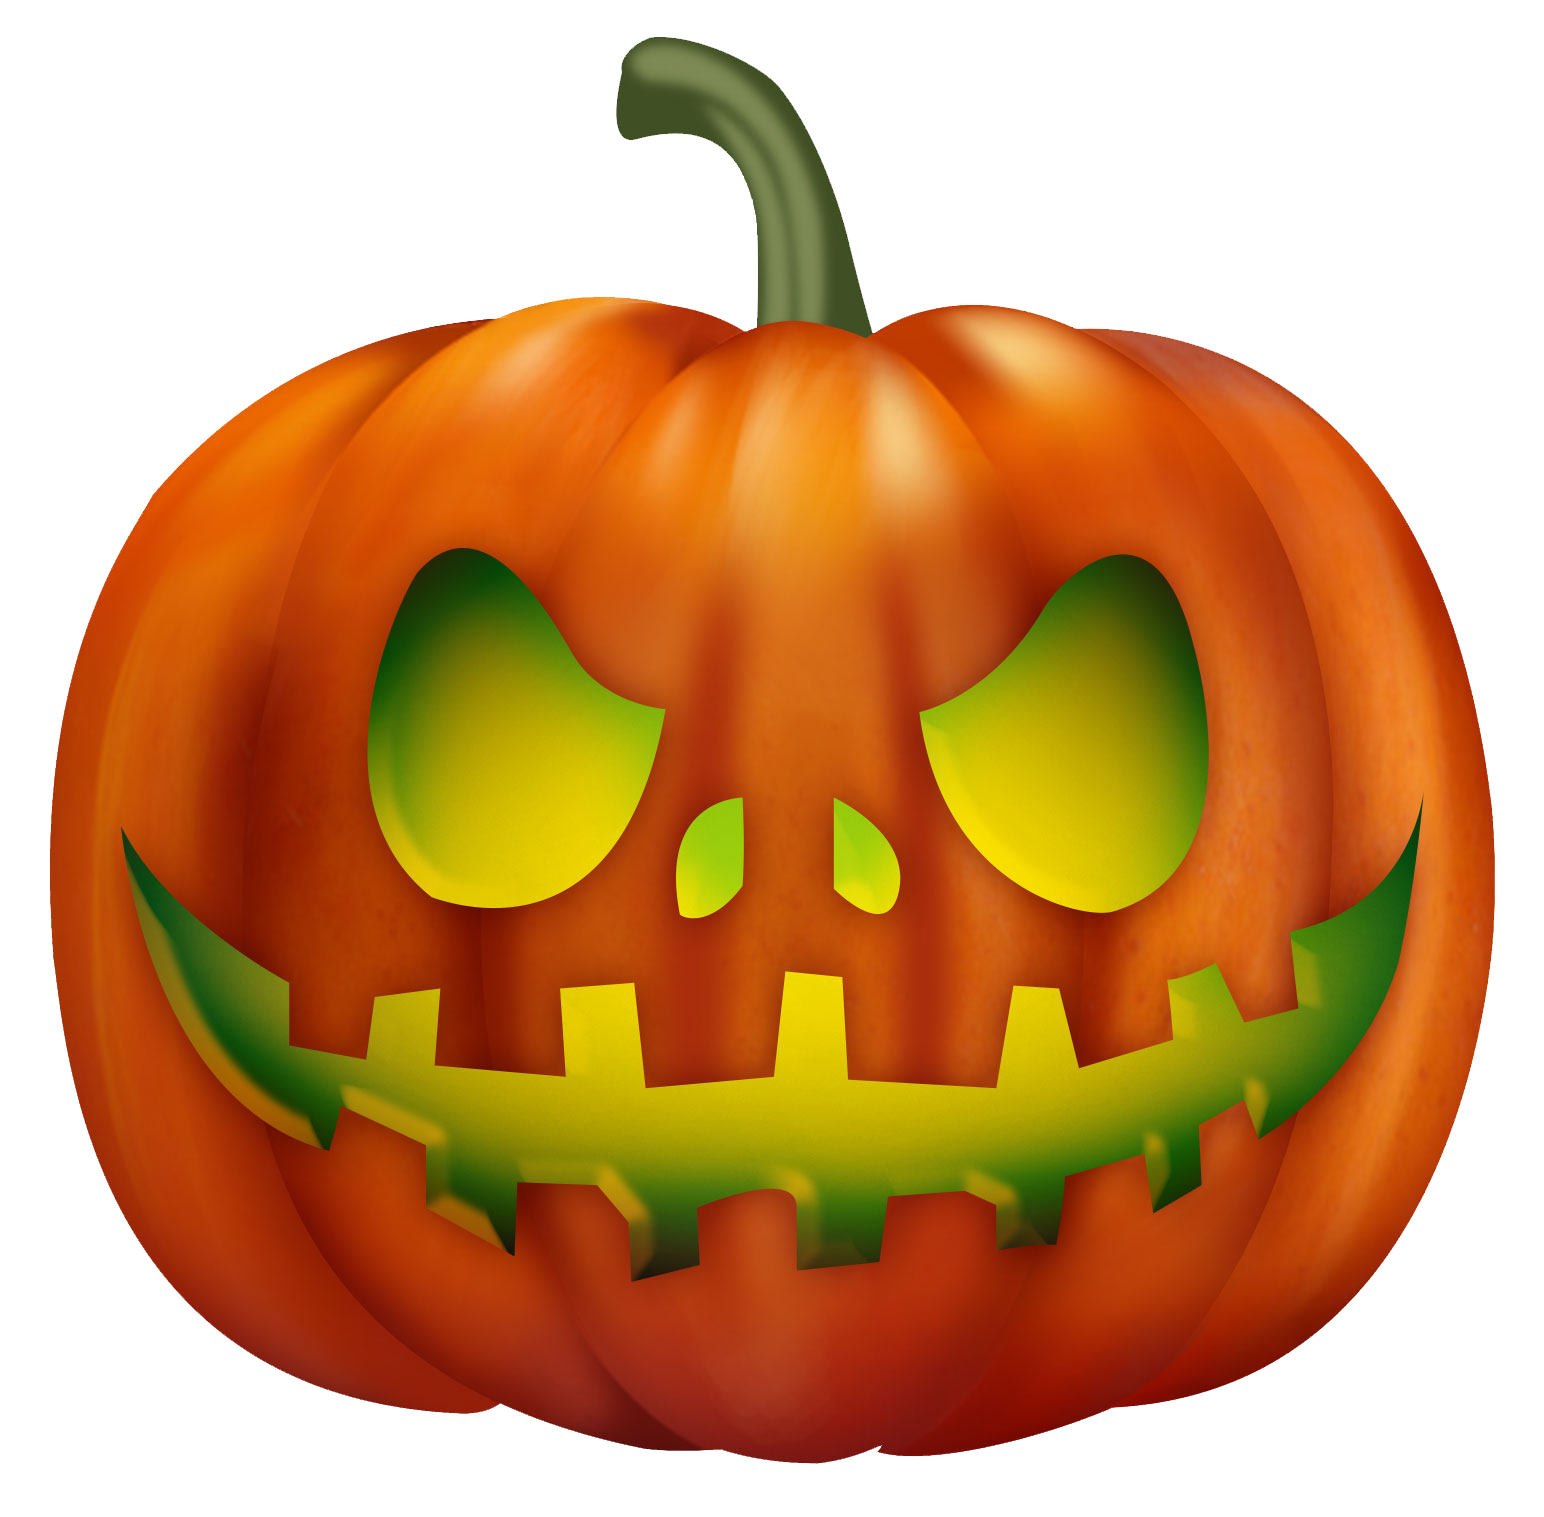 Download PNG image - Halloween Pumpkin PNG File 